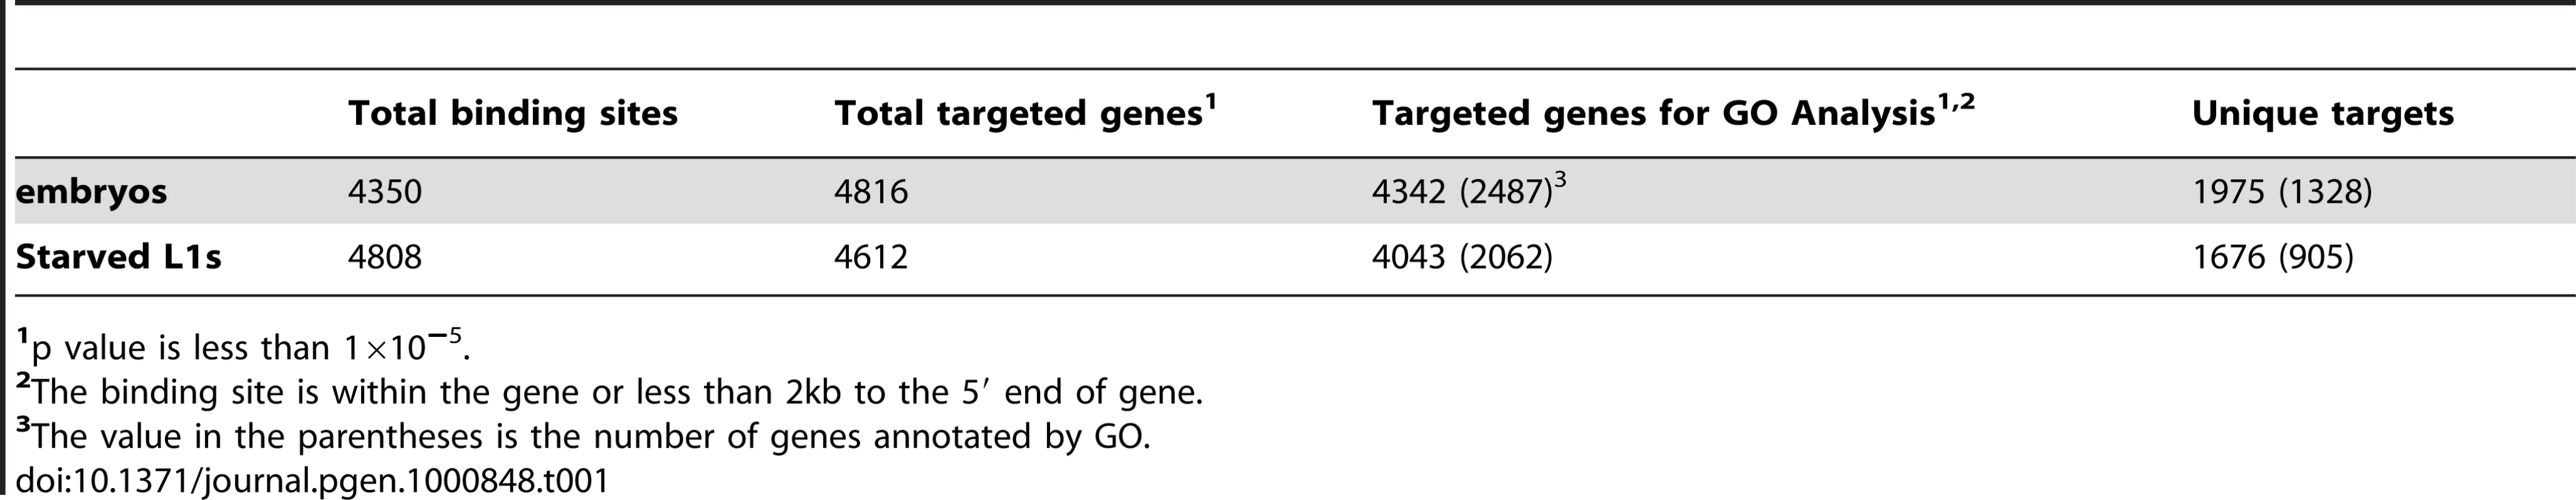 Summary of PHA-4 binding sites and gene targets.